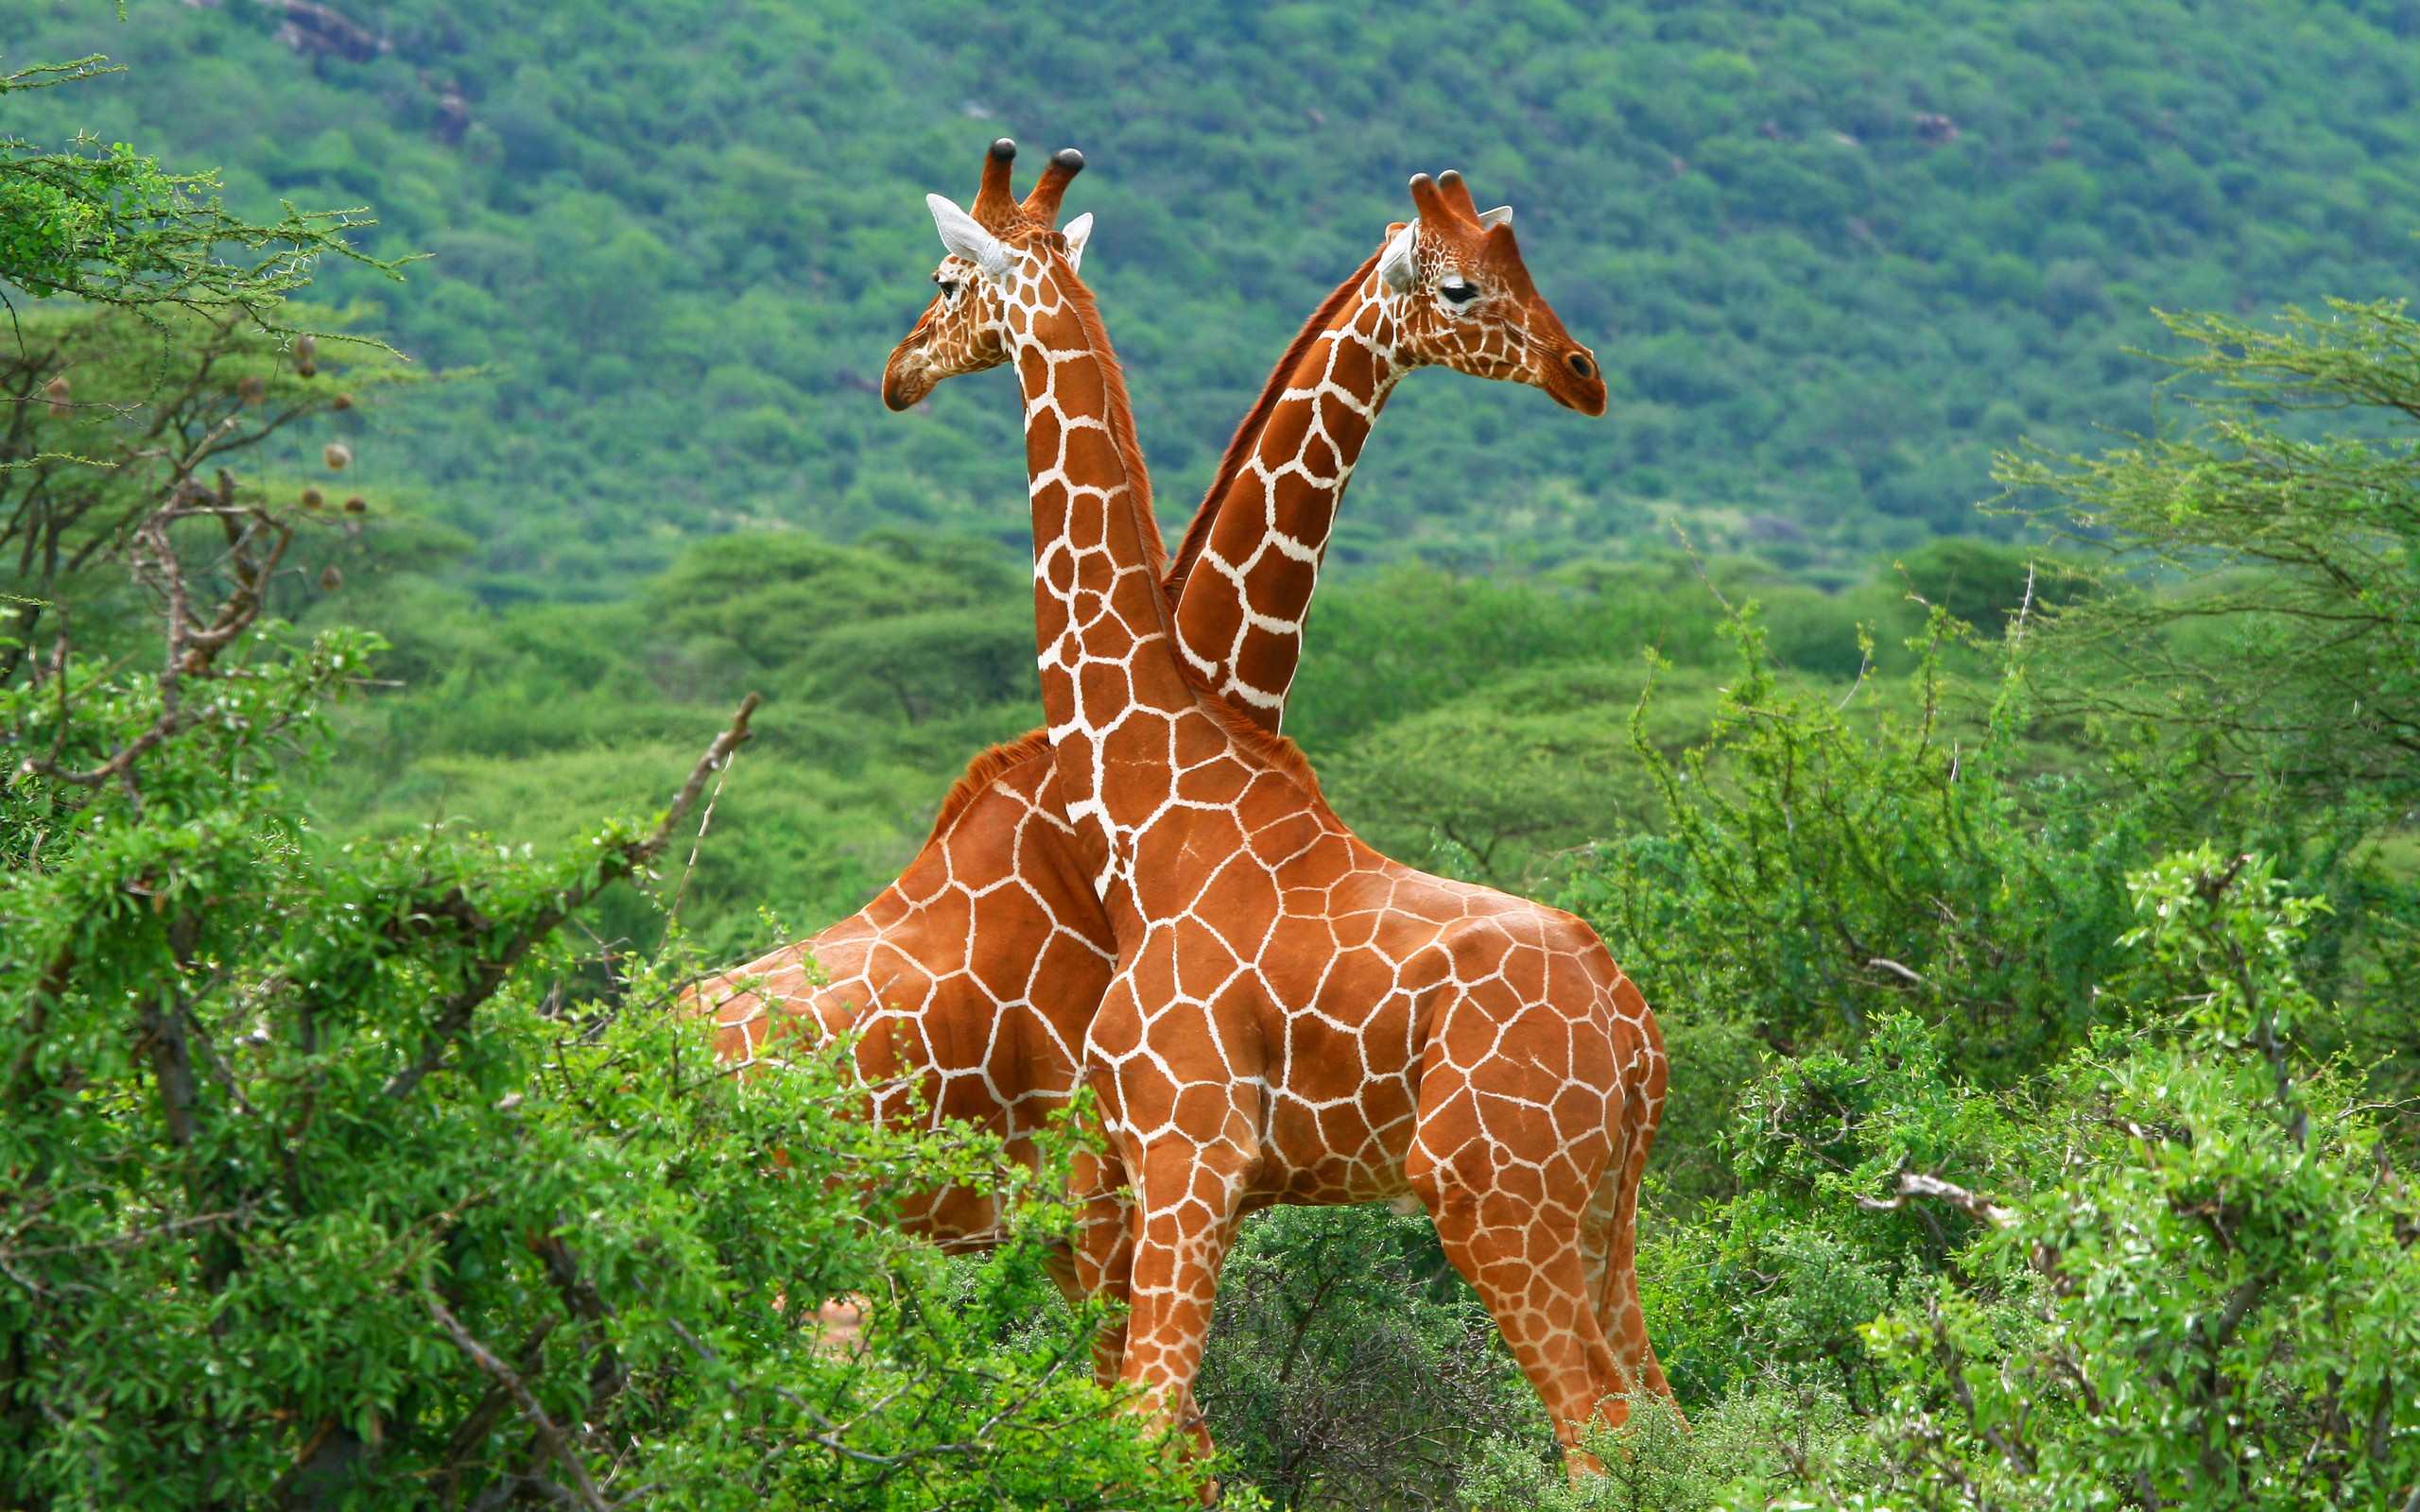 General 2560x1600 giraffes animals mammals nature vibrant